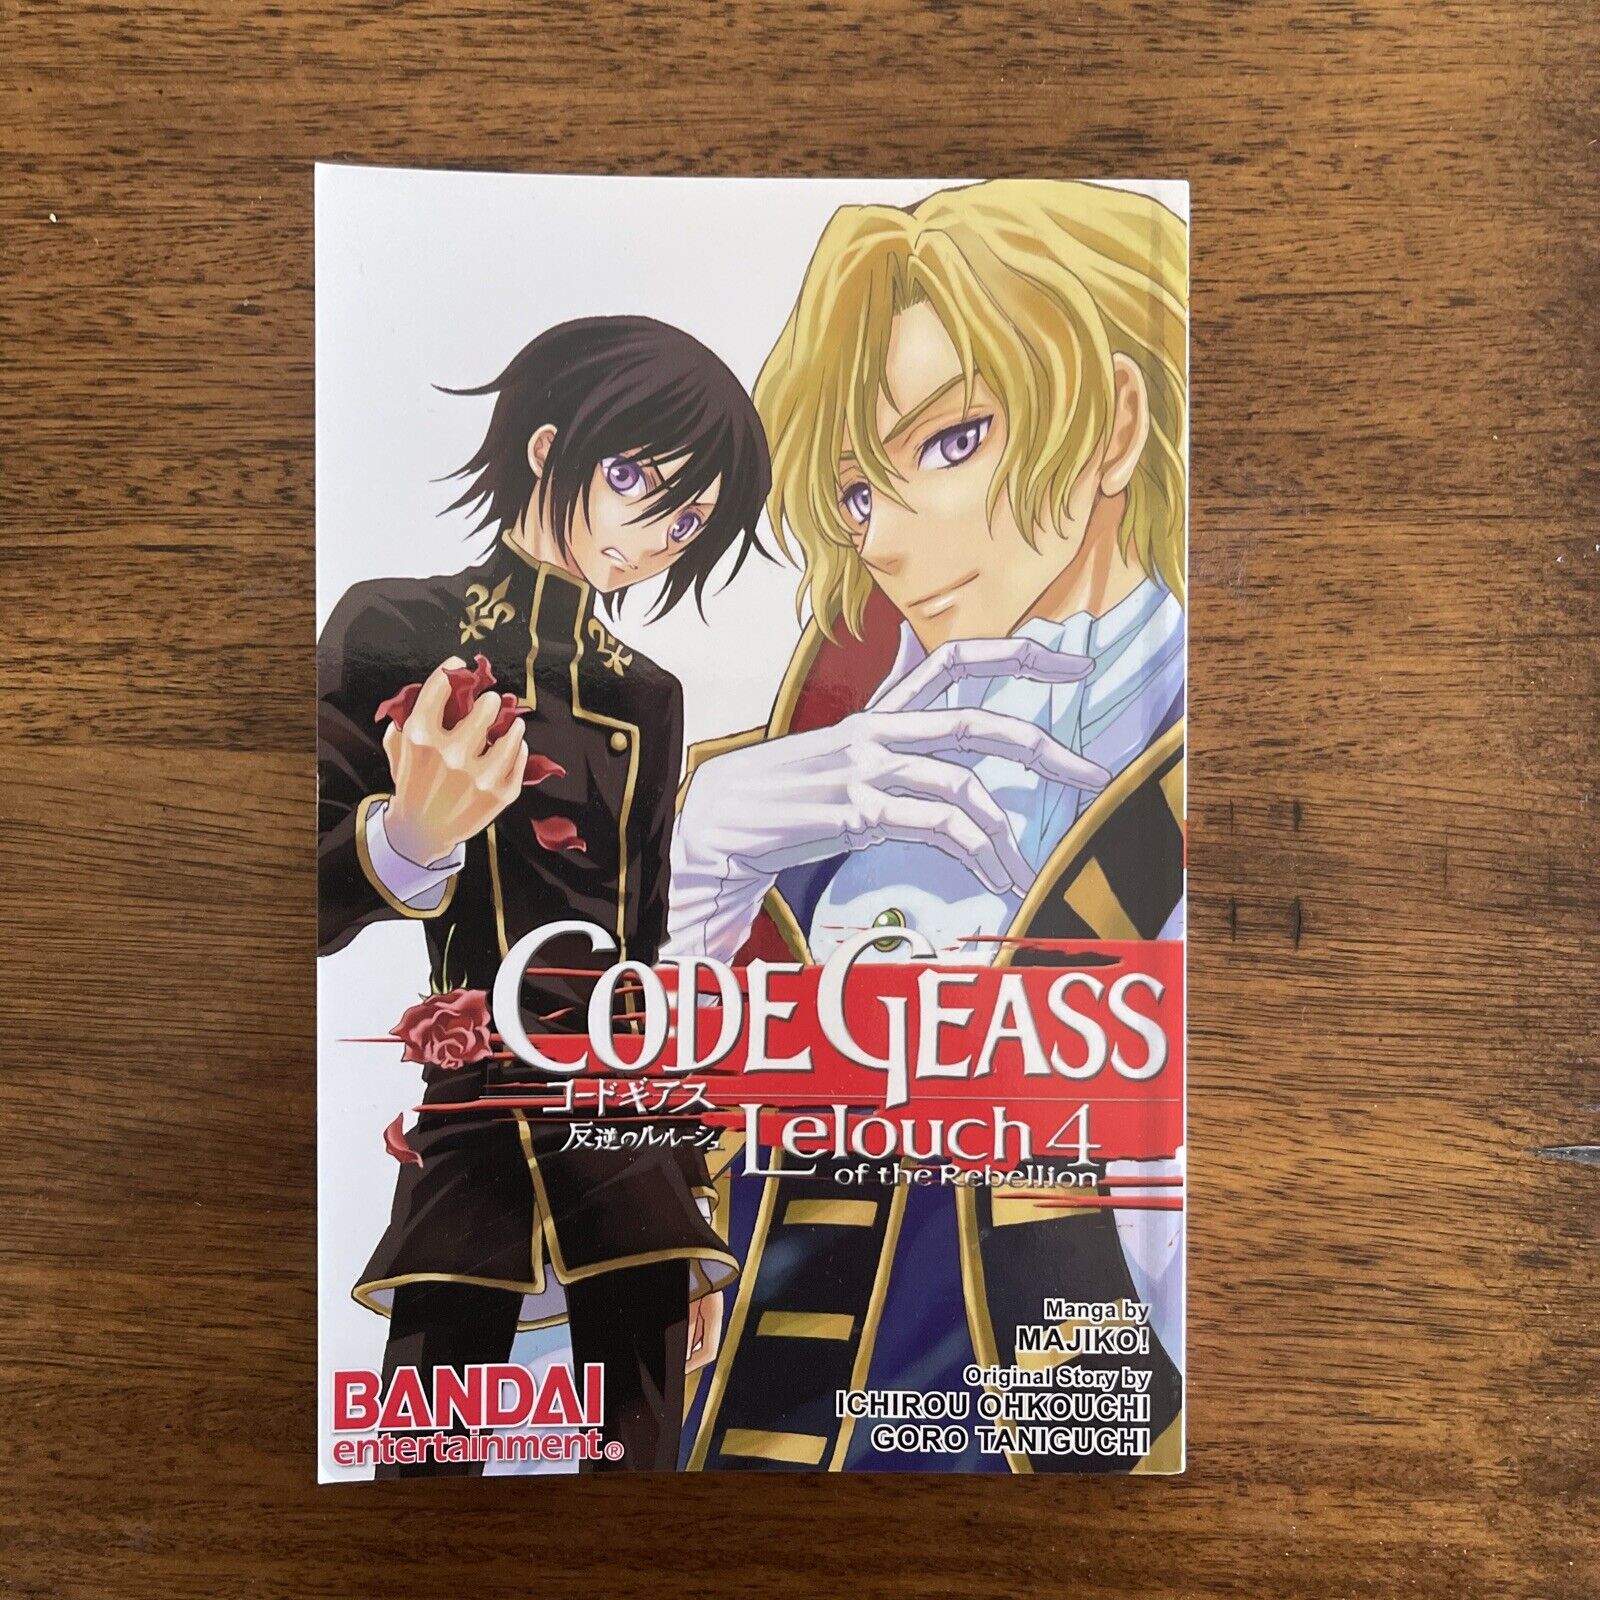 Code Geass Manga Volume 4: Lelouch of the Rebellion